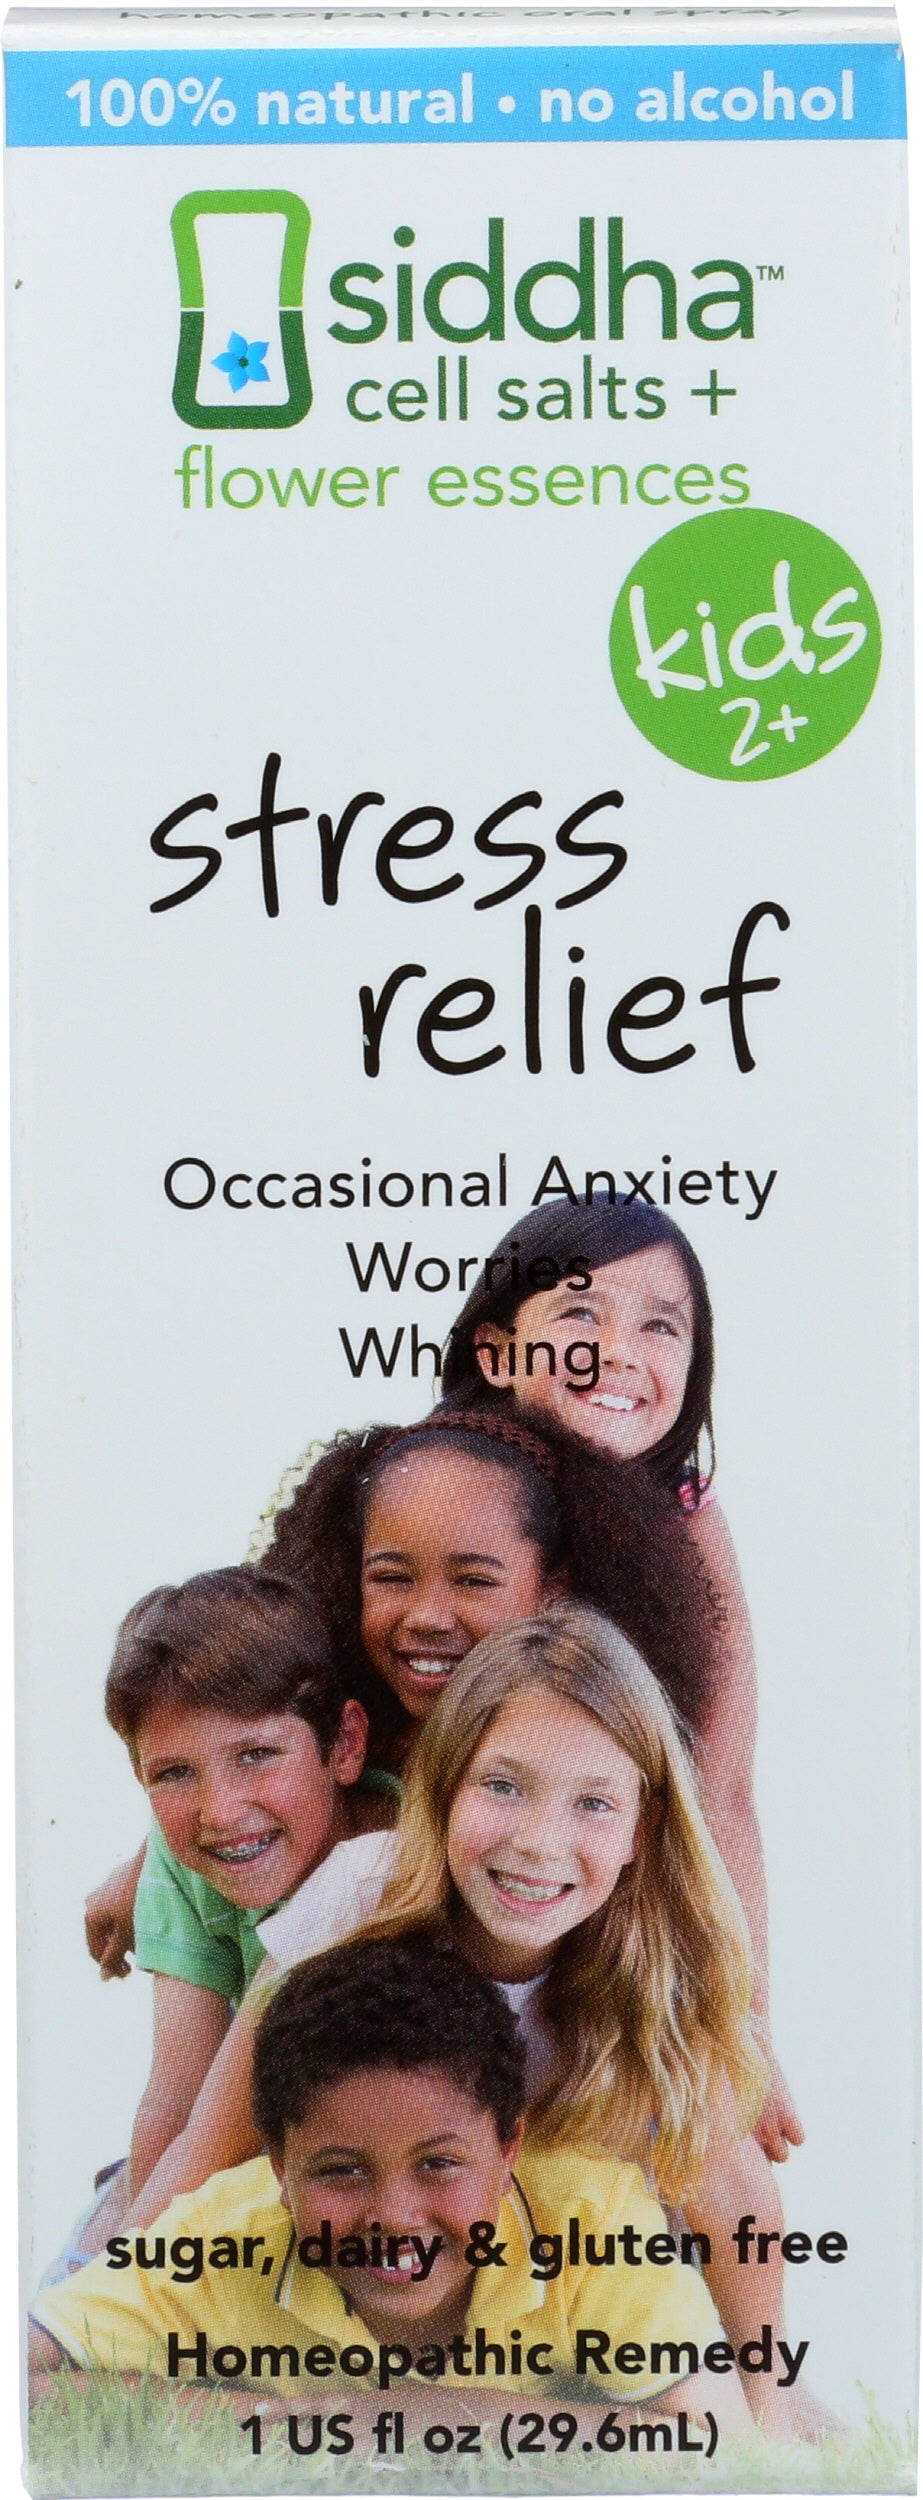 Siddha Remedies Stress Relief Kids 2+ 1 Fl. Oz. Front